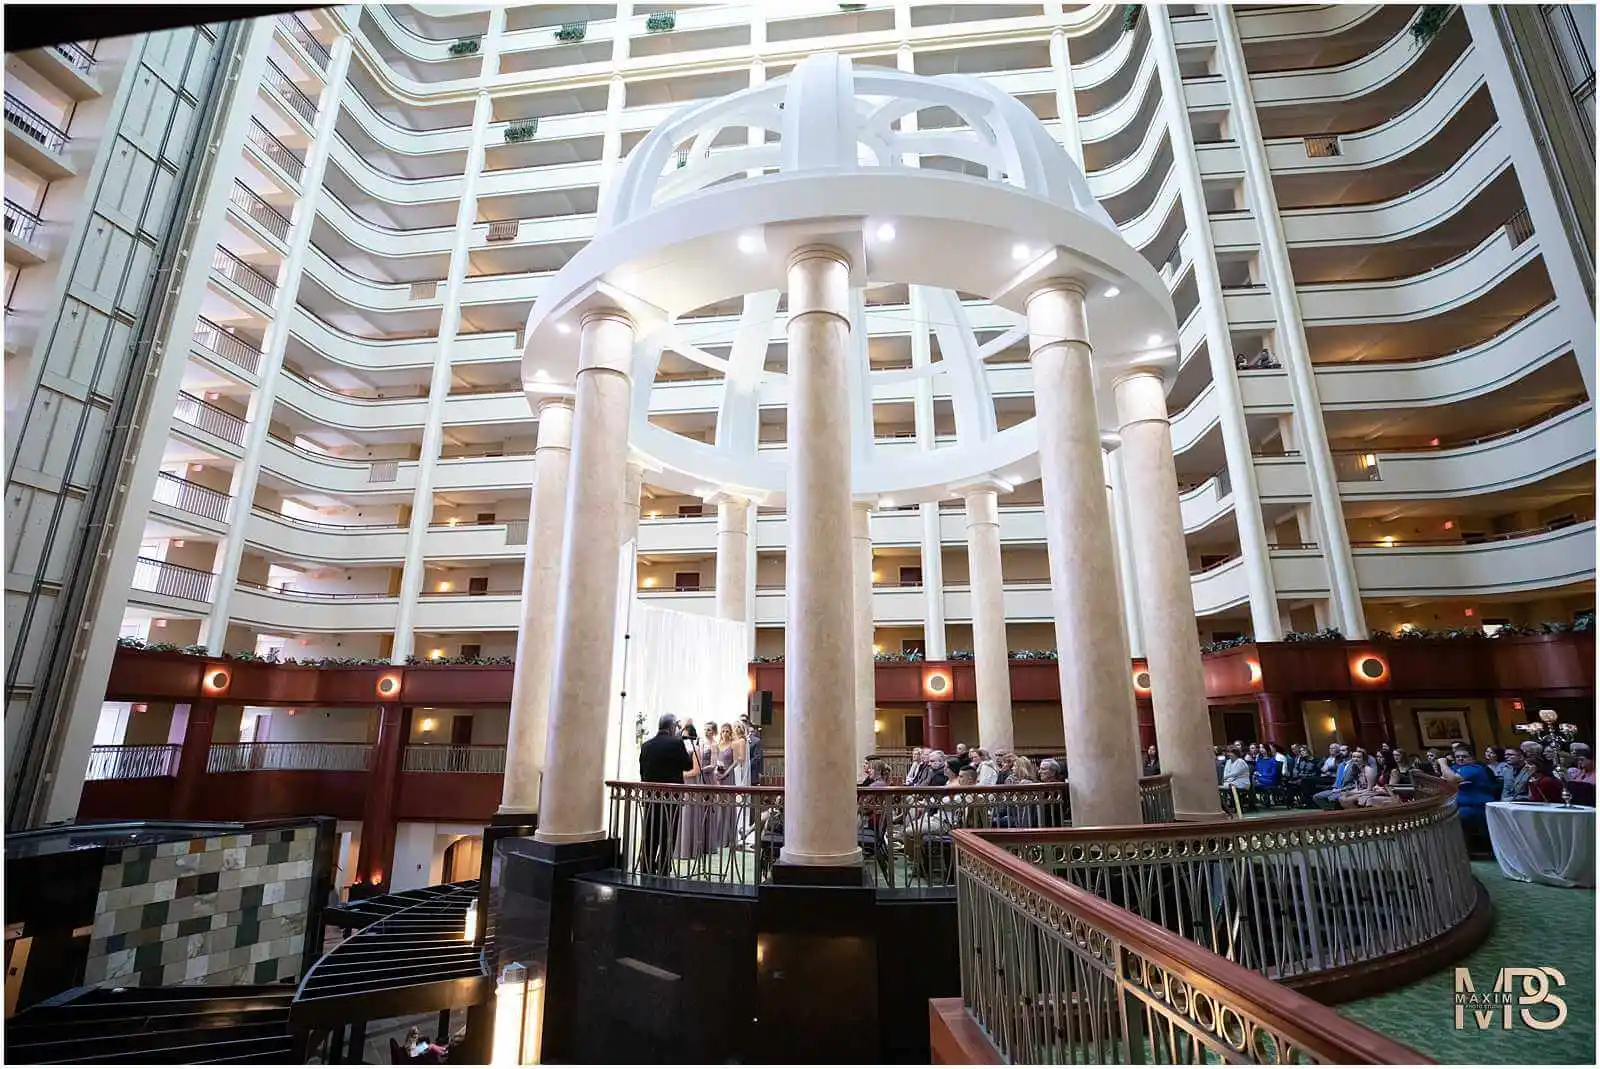 Luxurious hotel atrium with elegant architecture and balconies  at Marriott Rivercenter Covington KY